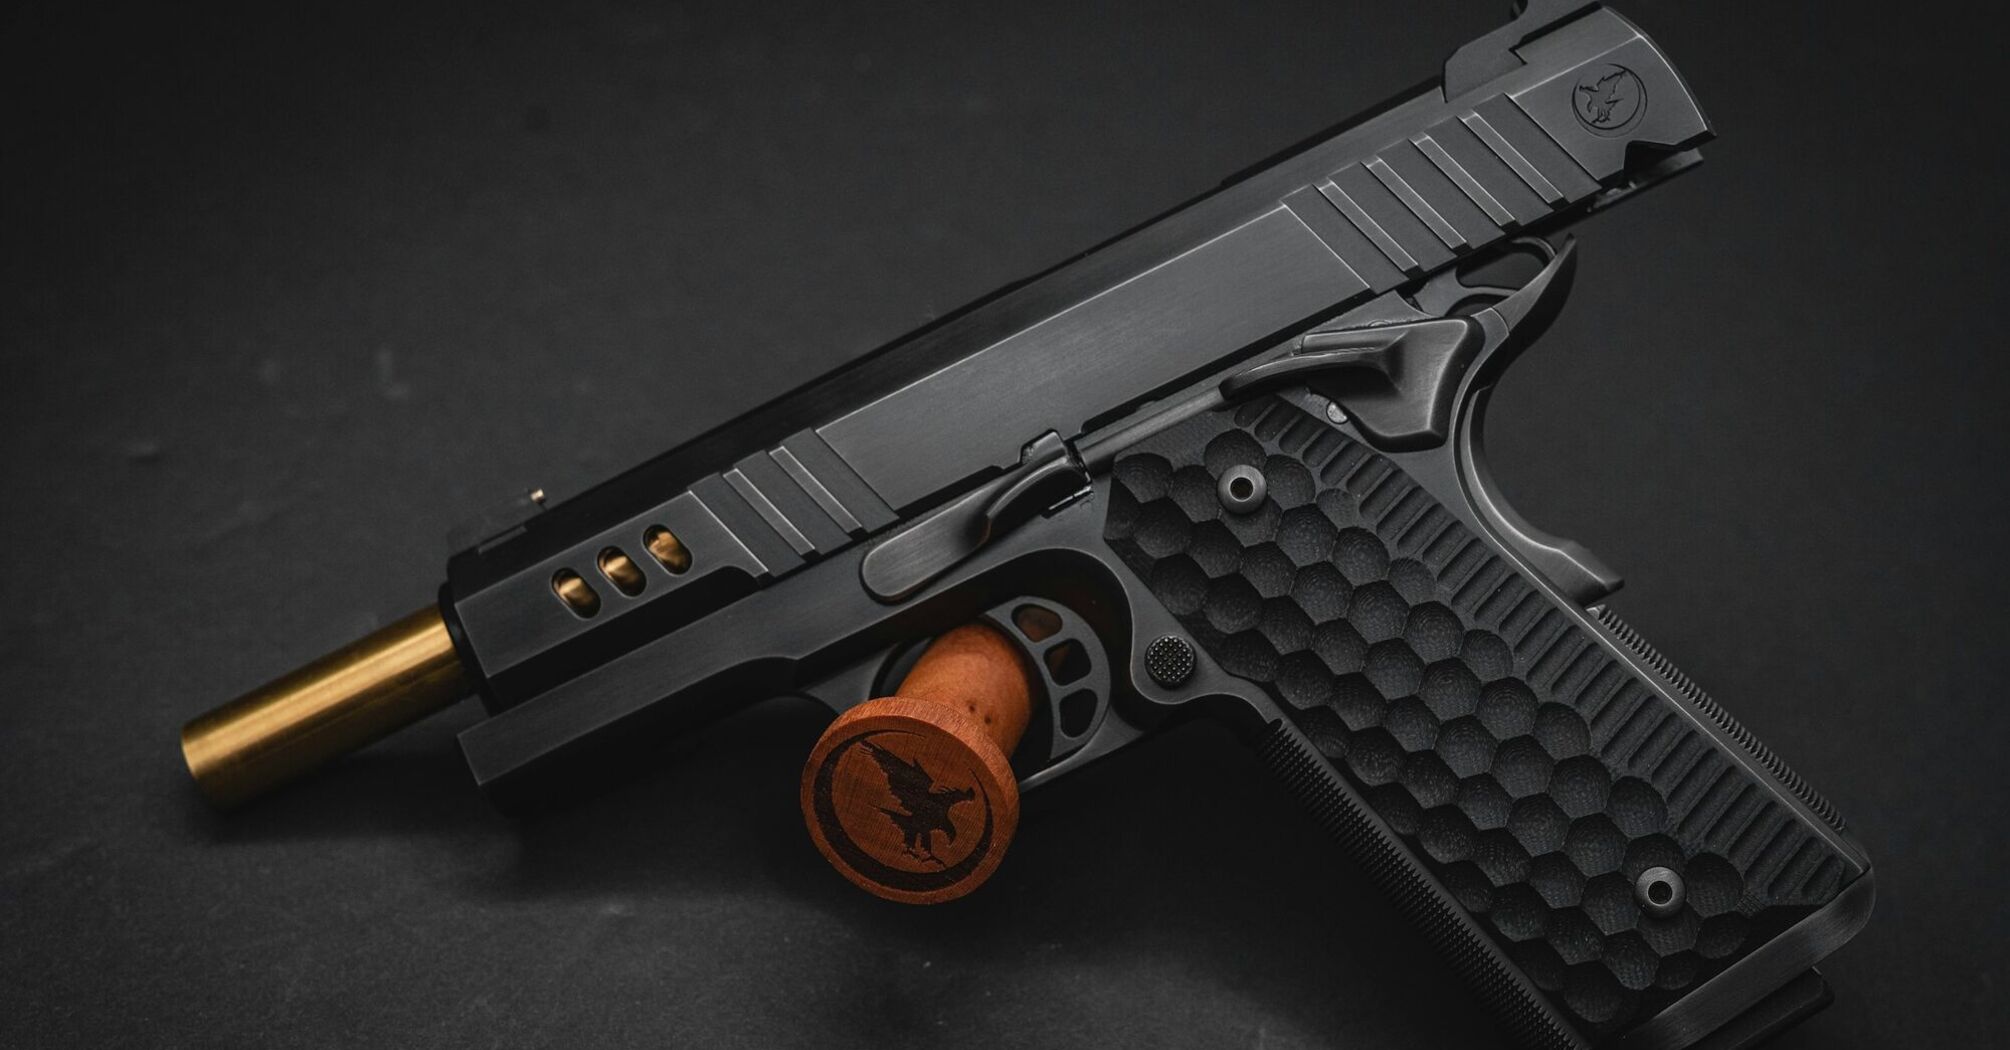 A black handgun with an embossed wooden grip rest on a dark background